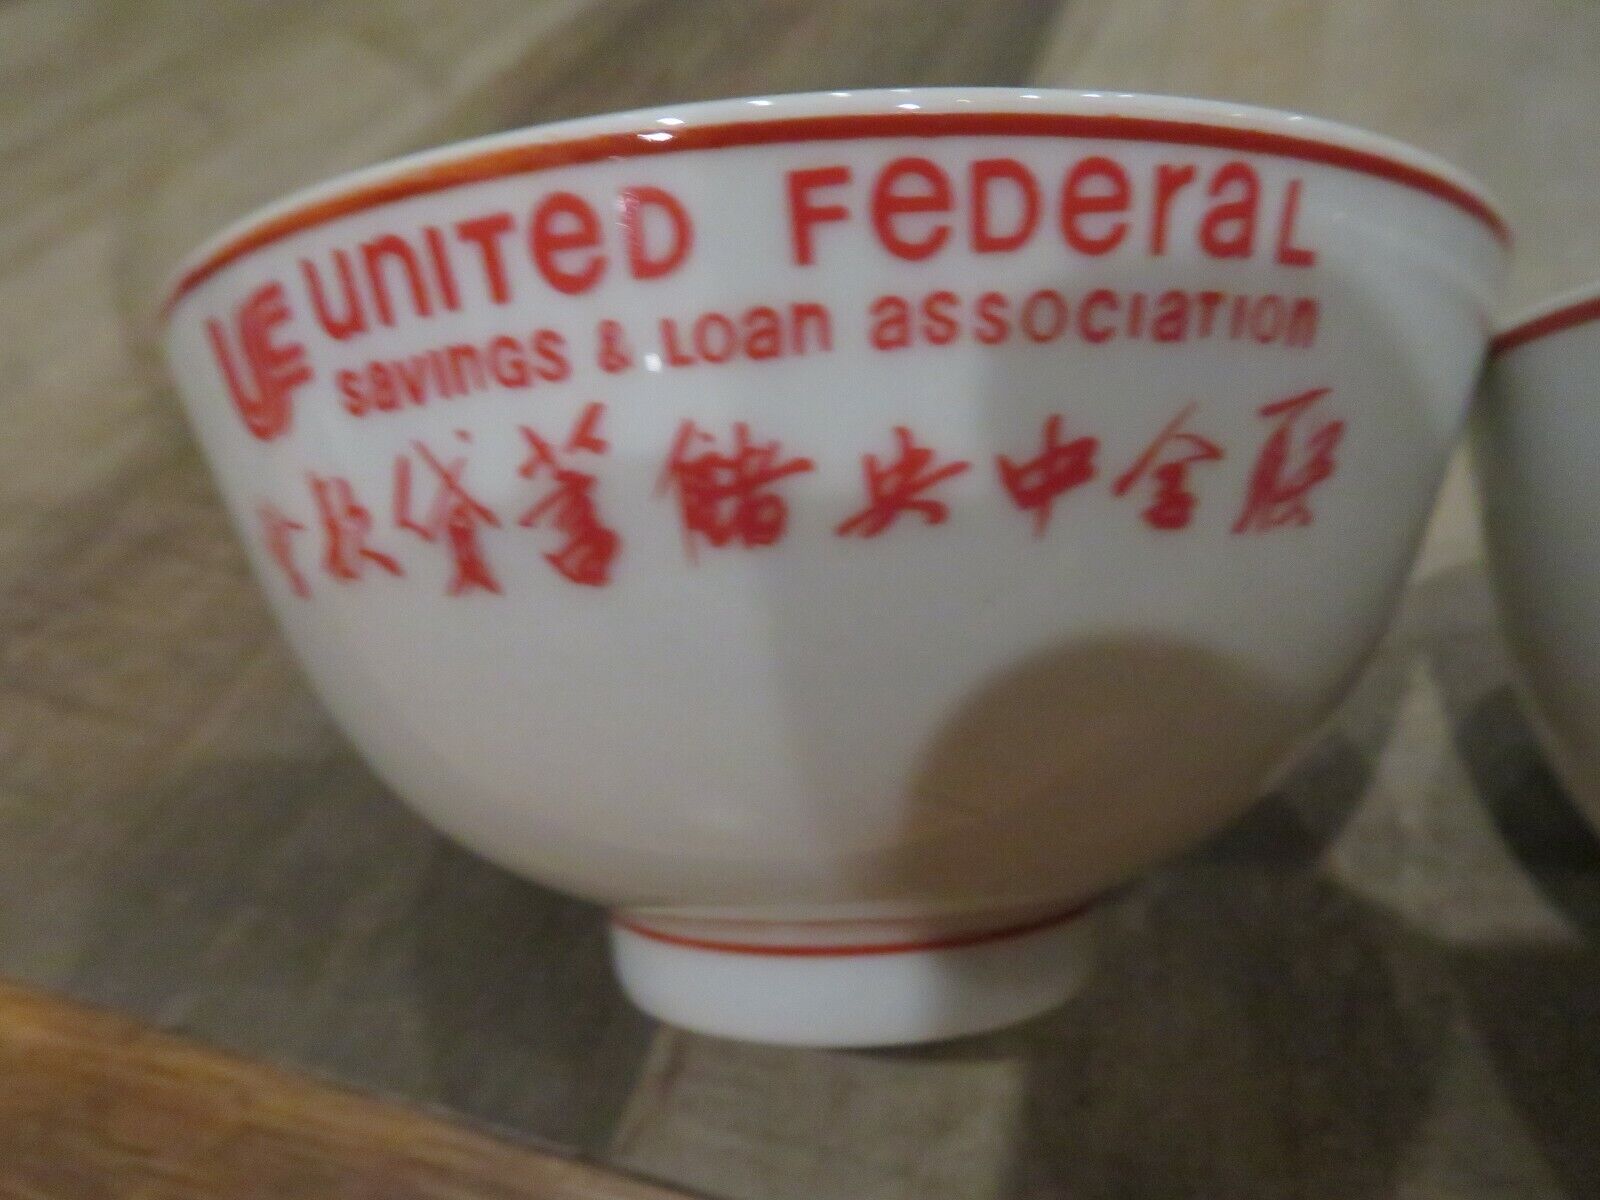 VTG Collectible Chinese Rice Bowls (2) United Federal Savings & Loan Assoc Bank  United Federal Savings & Loan Association Bank - фотография #3